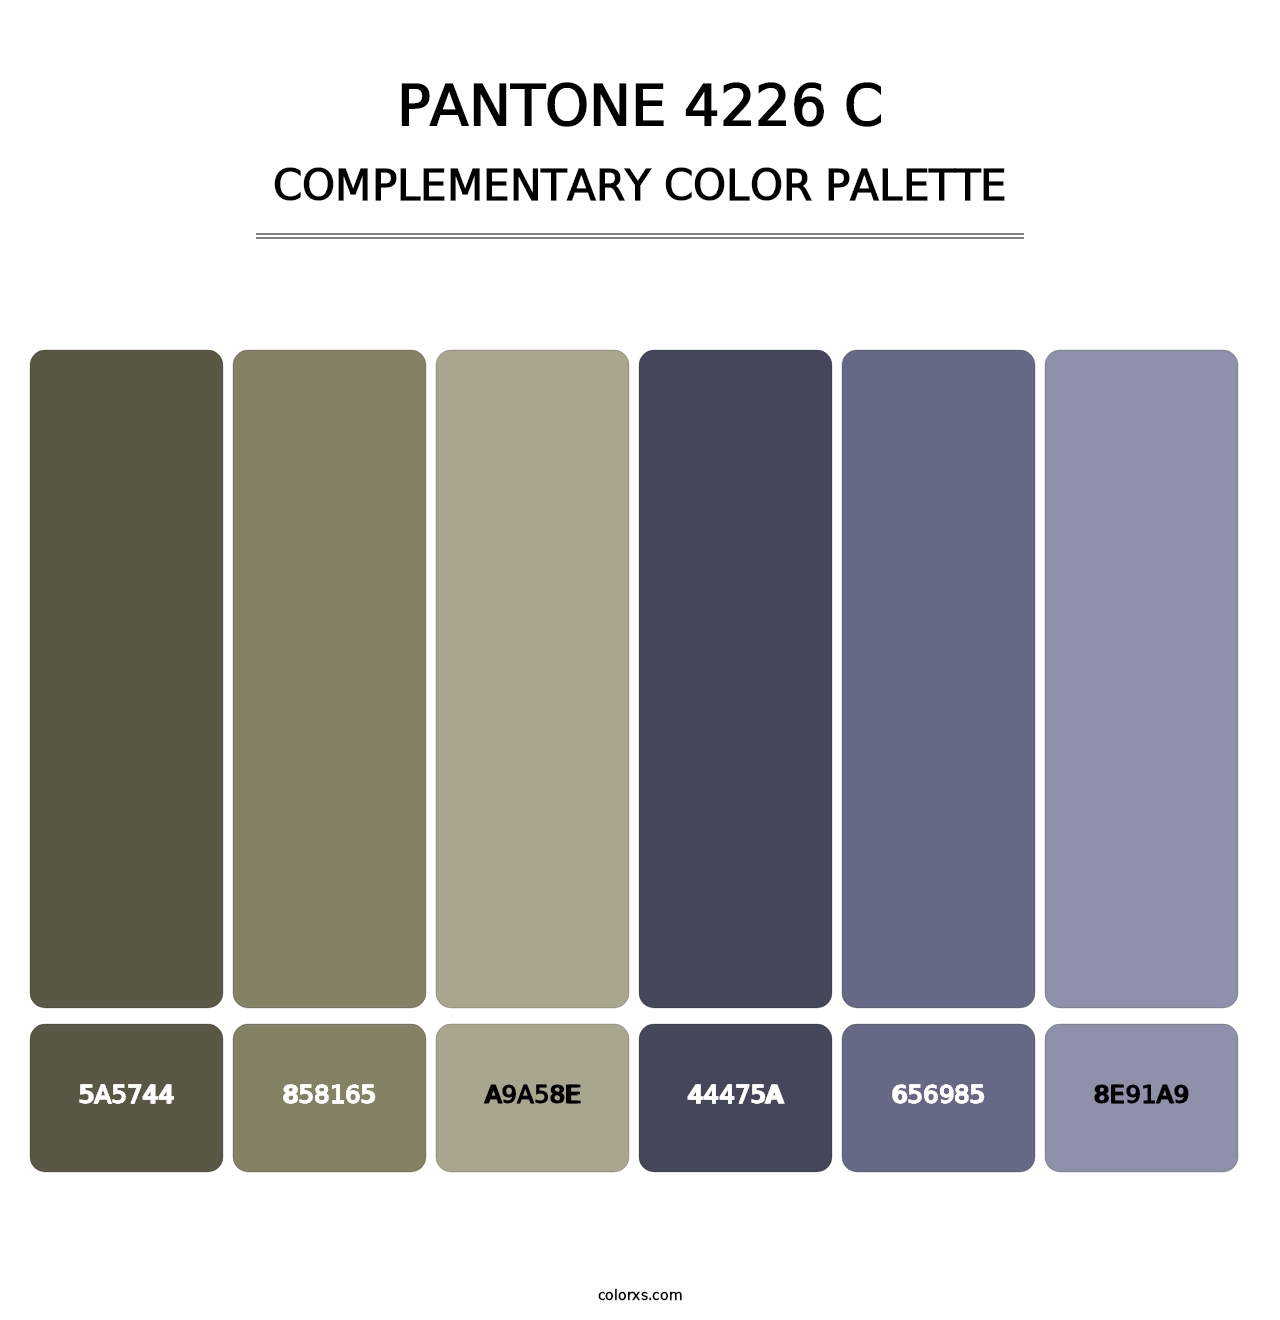 PANTONE 4226 C - Complementary Color Palette